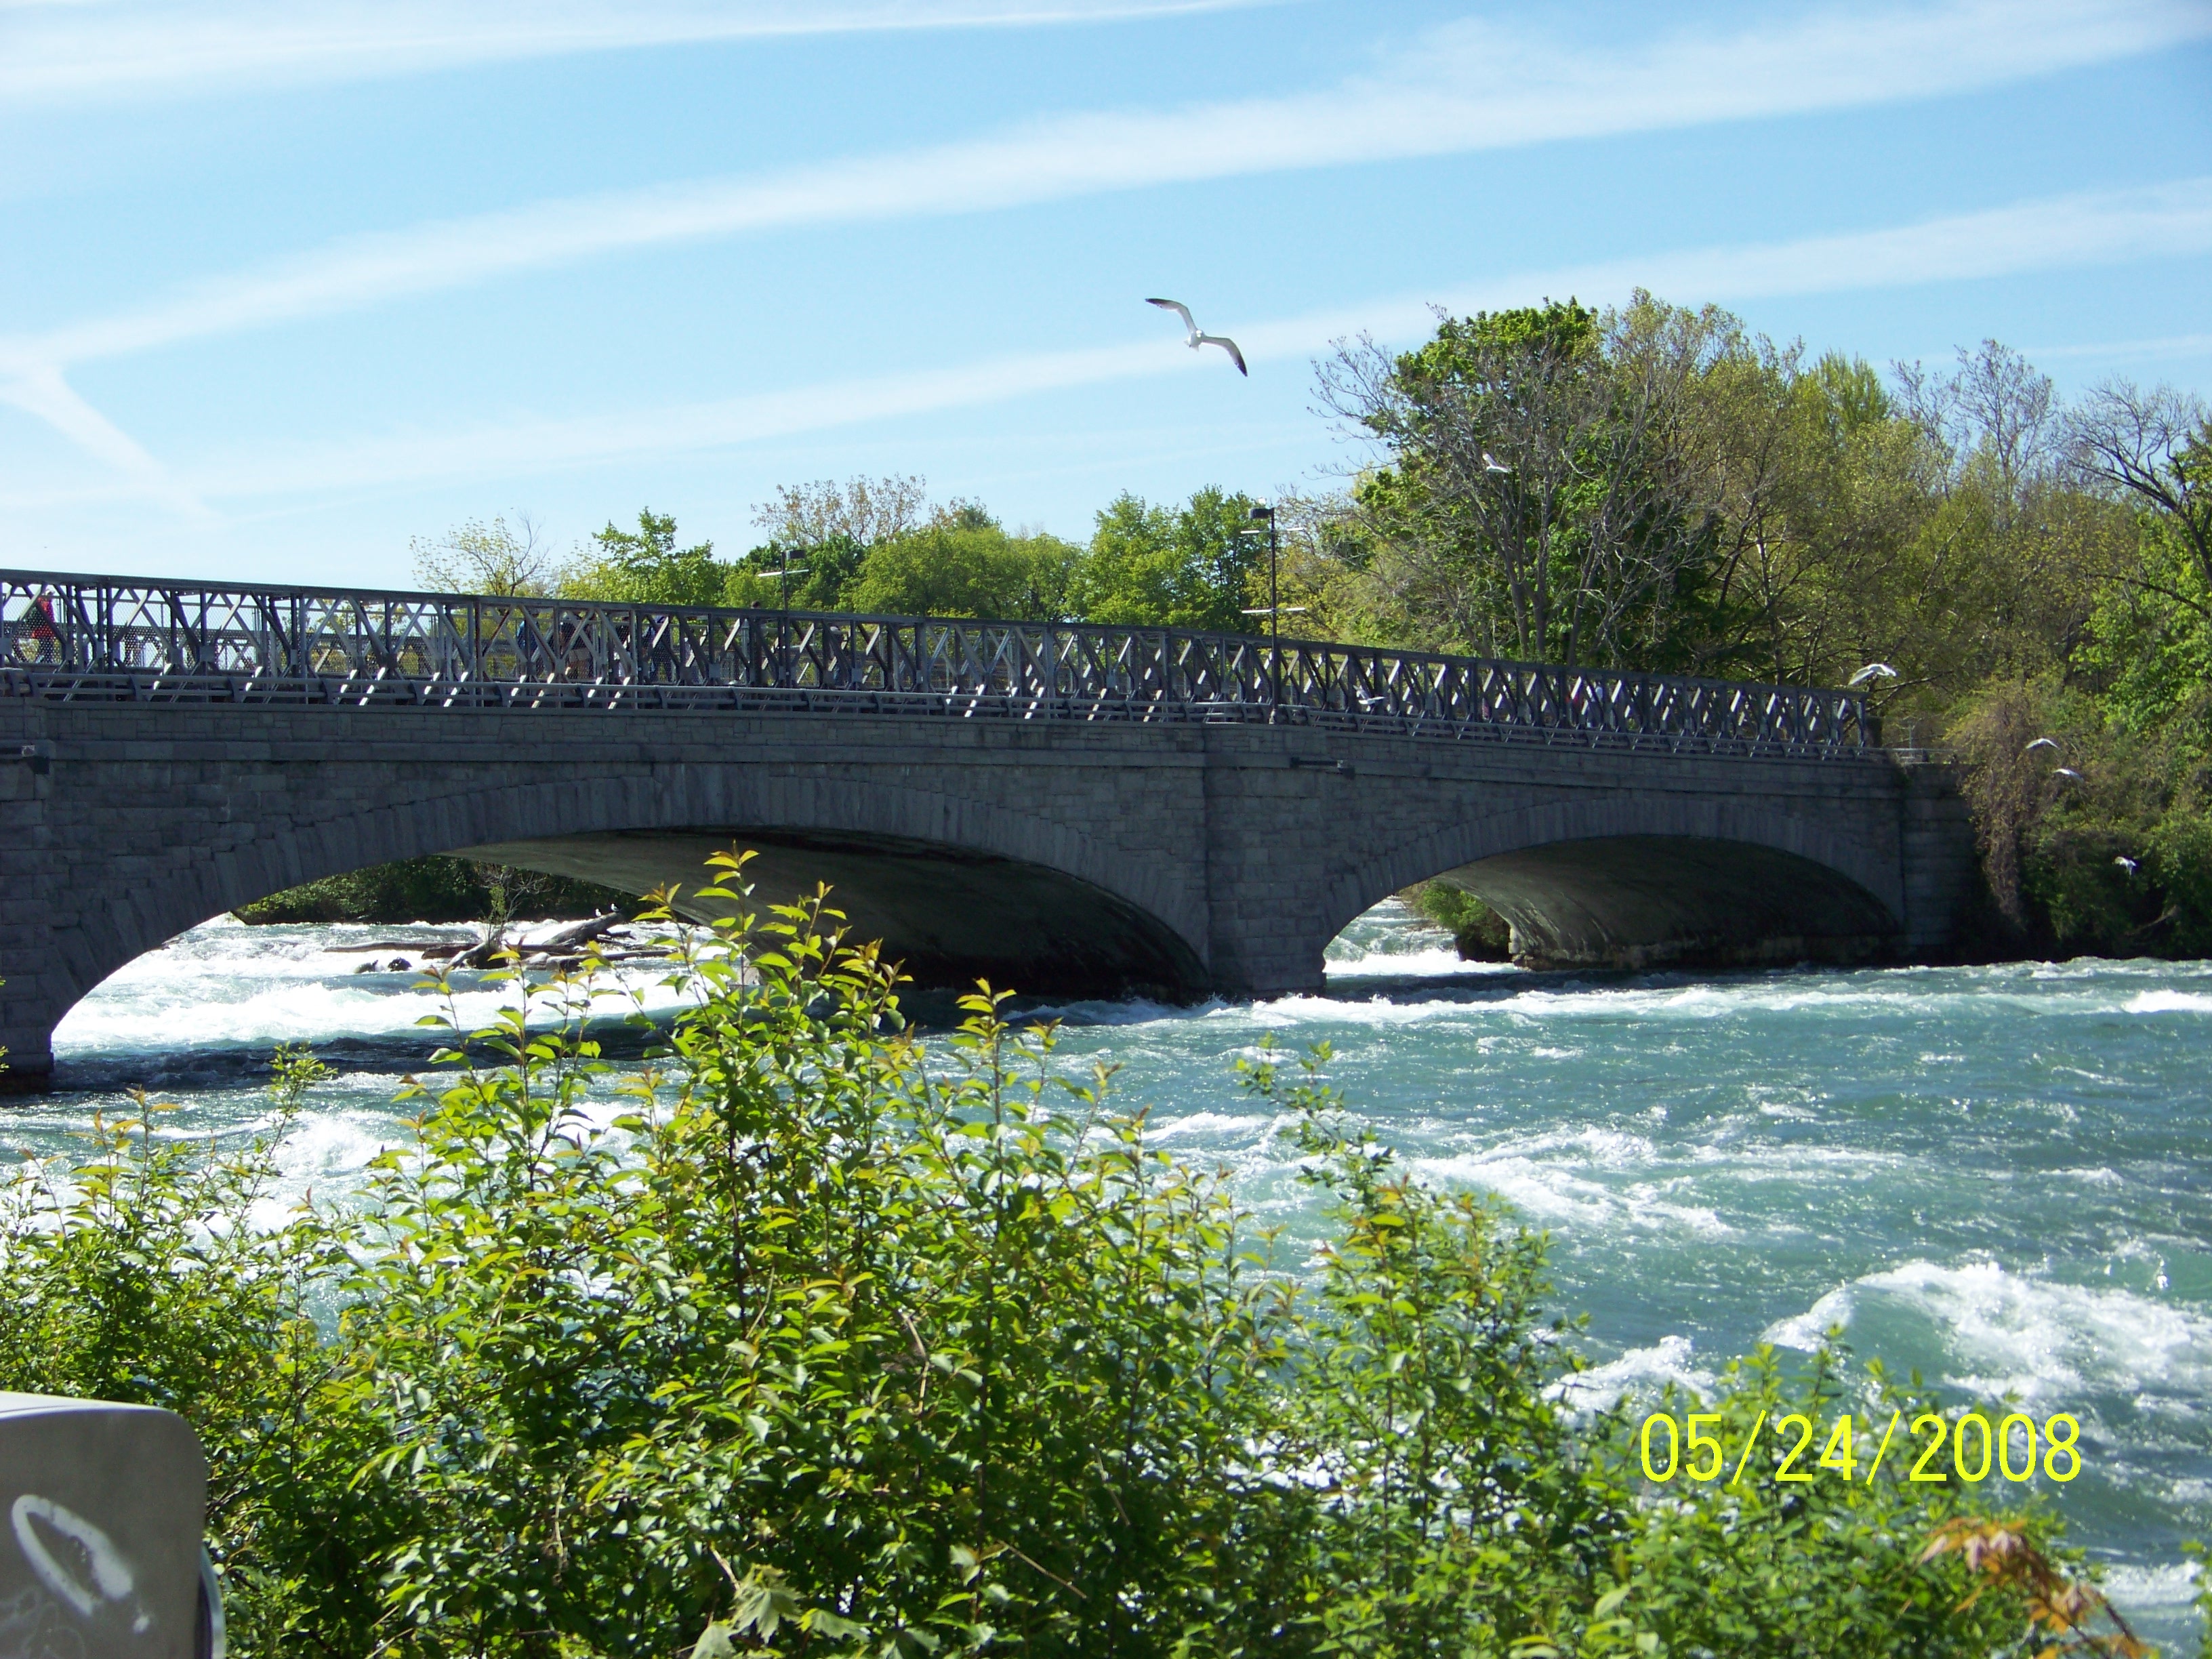 Beauty of Niagara River, Amazing, Scenery, Plants, Pure, HQ Photo